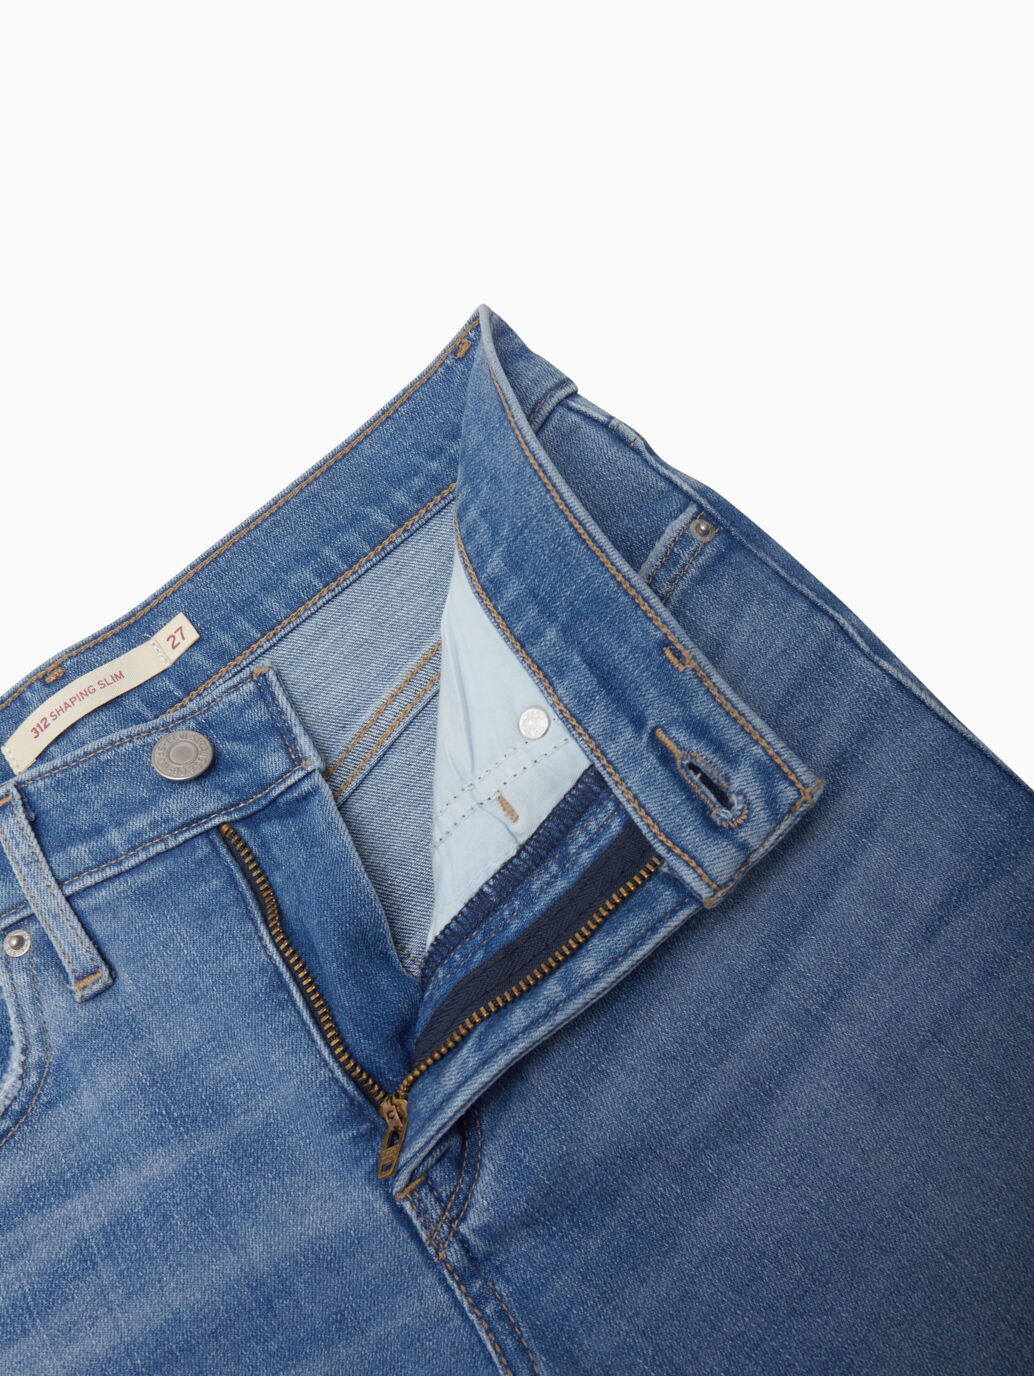 Levi’s® Women's 312 Shaping Slim Jeans - Tribeca Sun